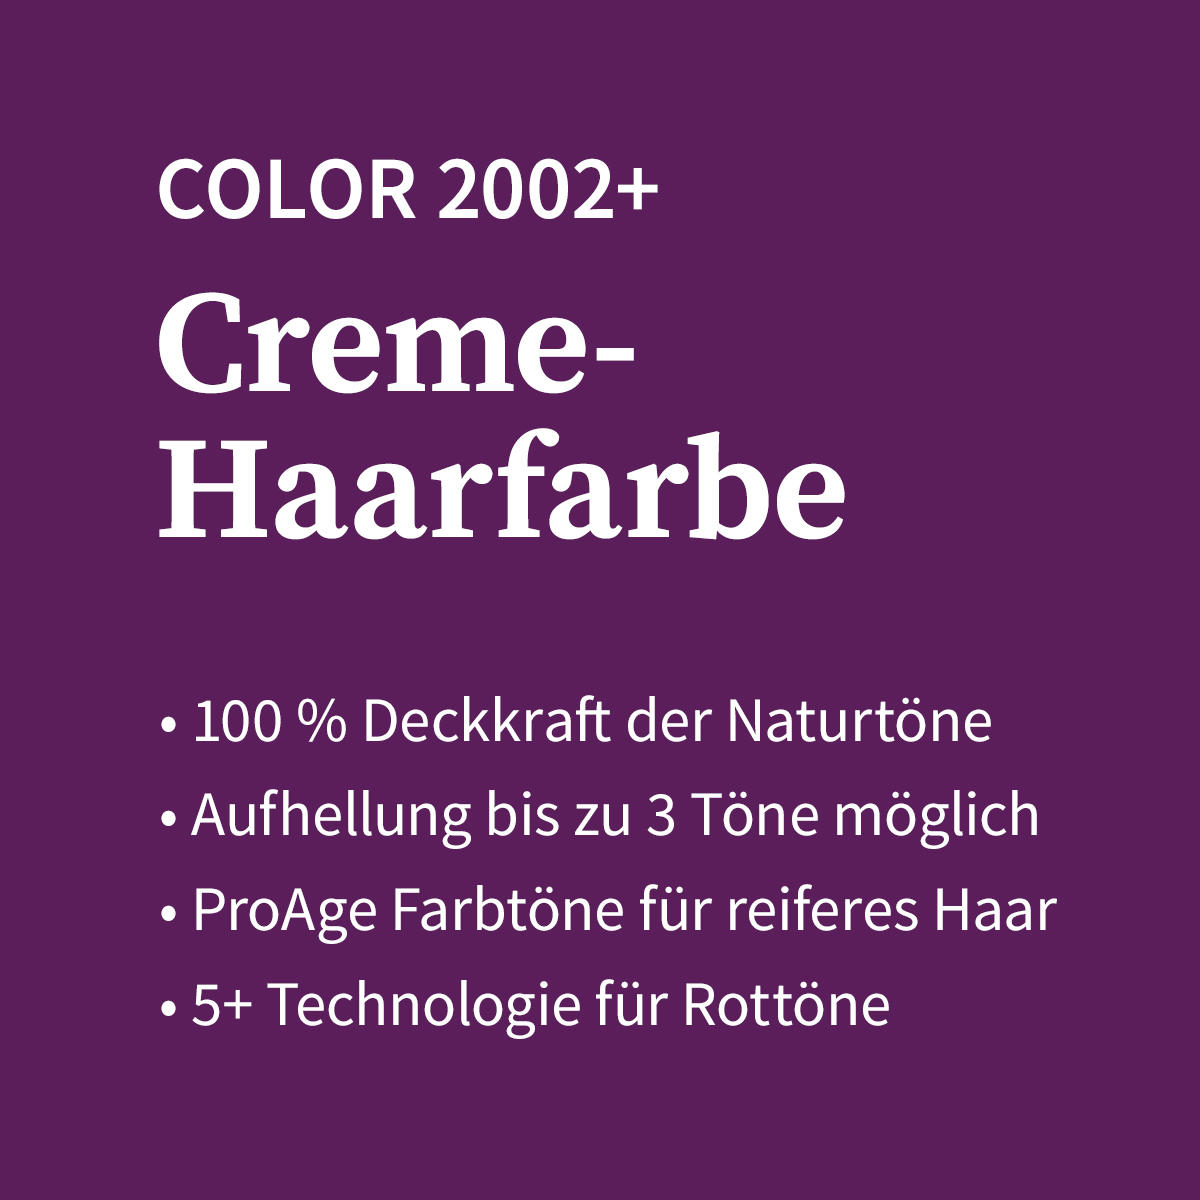 Basler Color 2002+ Cremehaarfarbe 6/1 dunkelblond asch, Tube 60 ml - 4